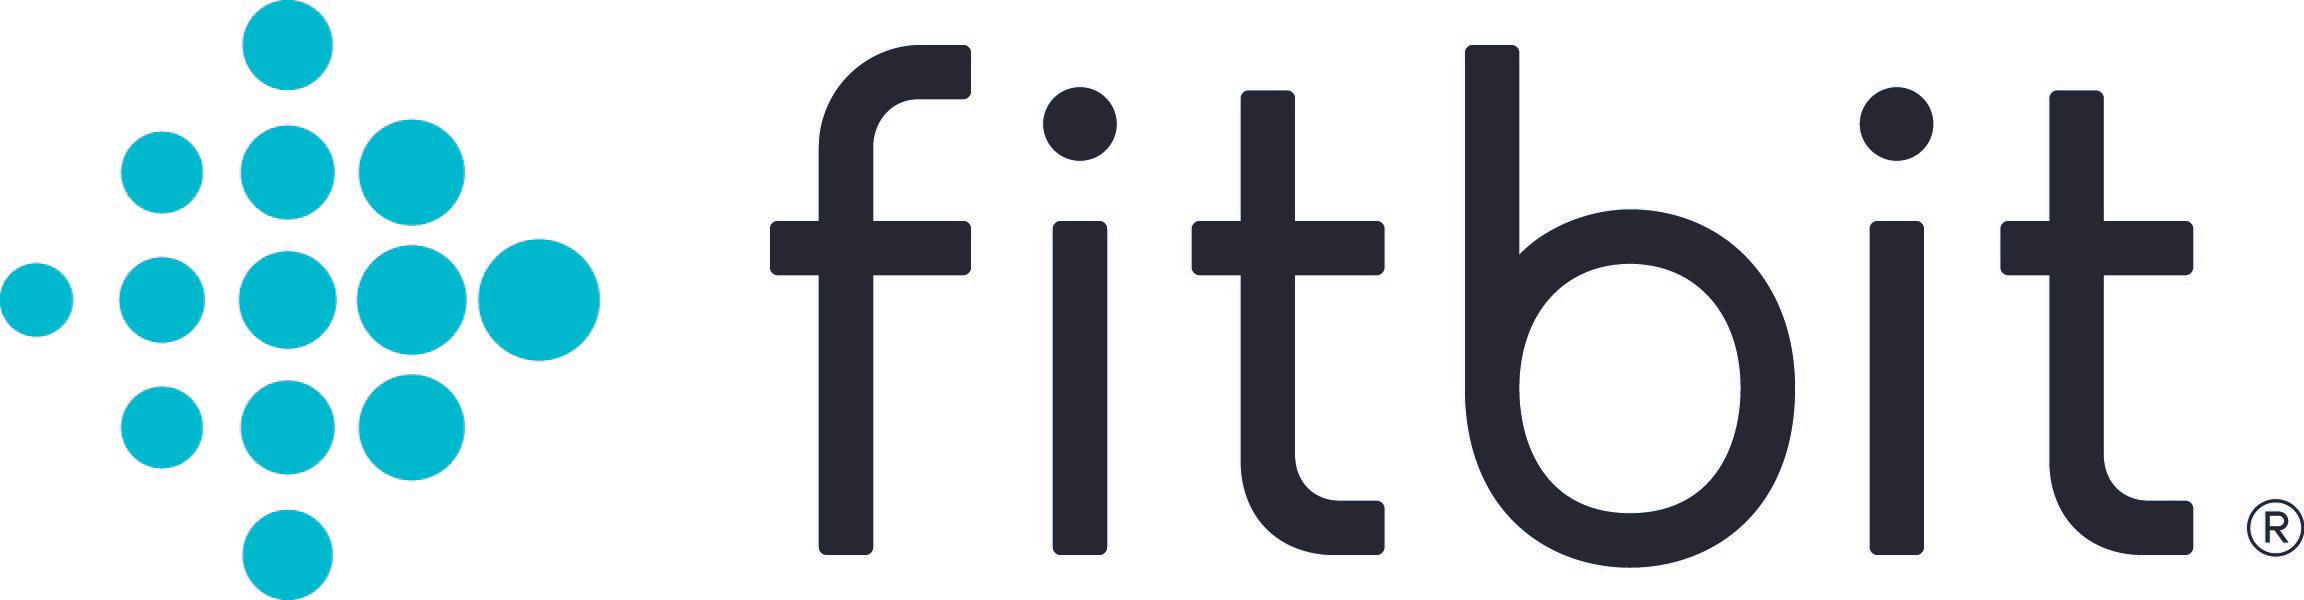 https://mms.businesswire.com/media/20170828005293/en/608861/5/Fitbit_logo_highres.jpg